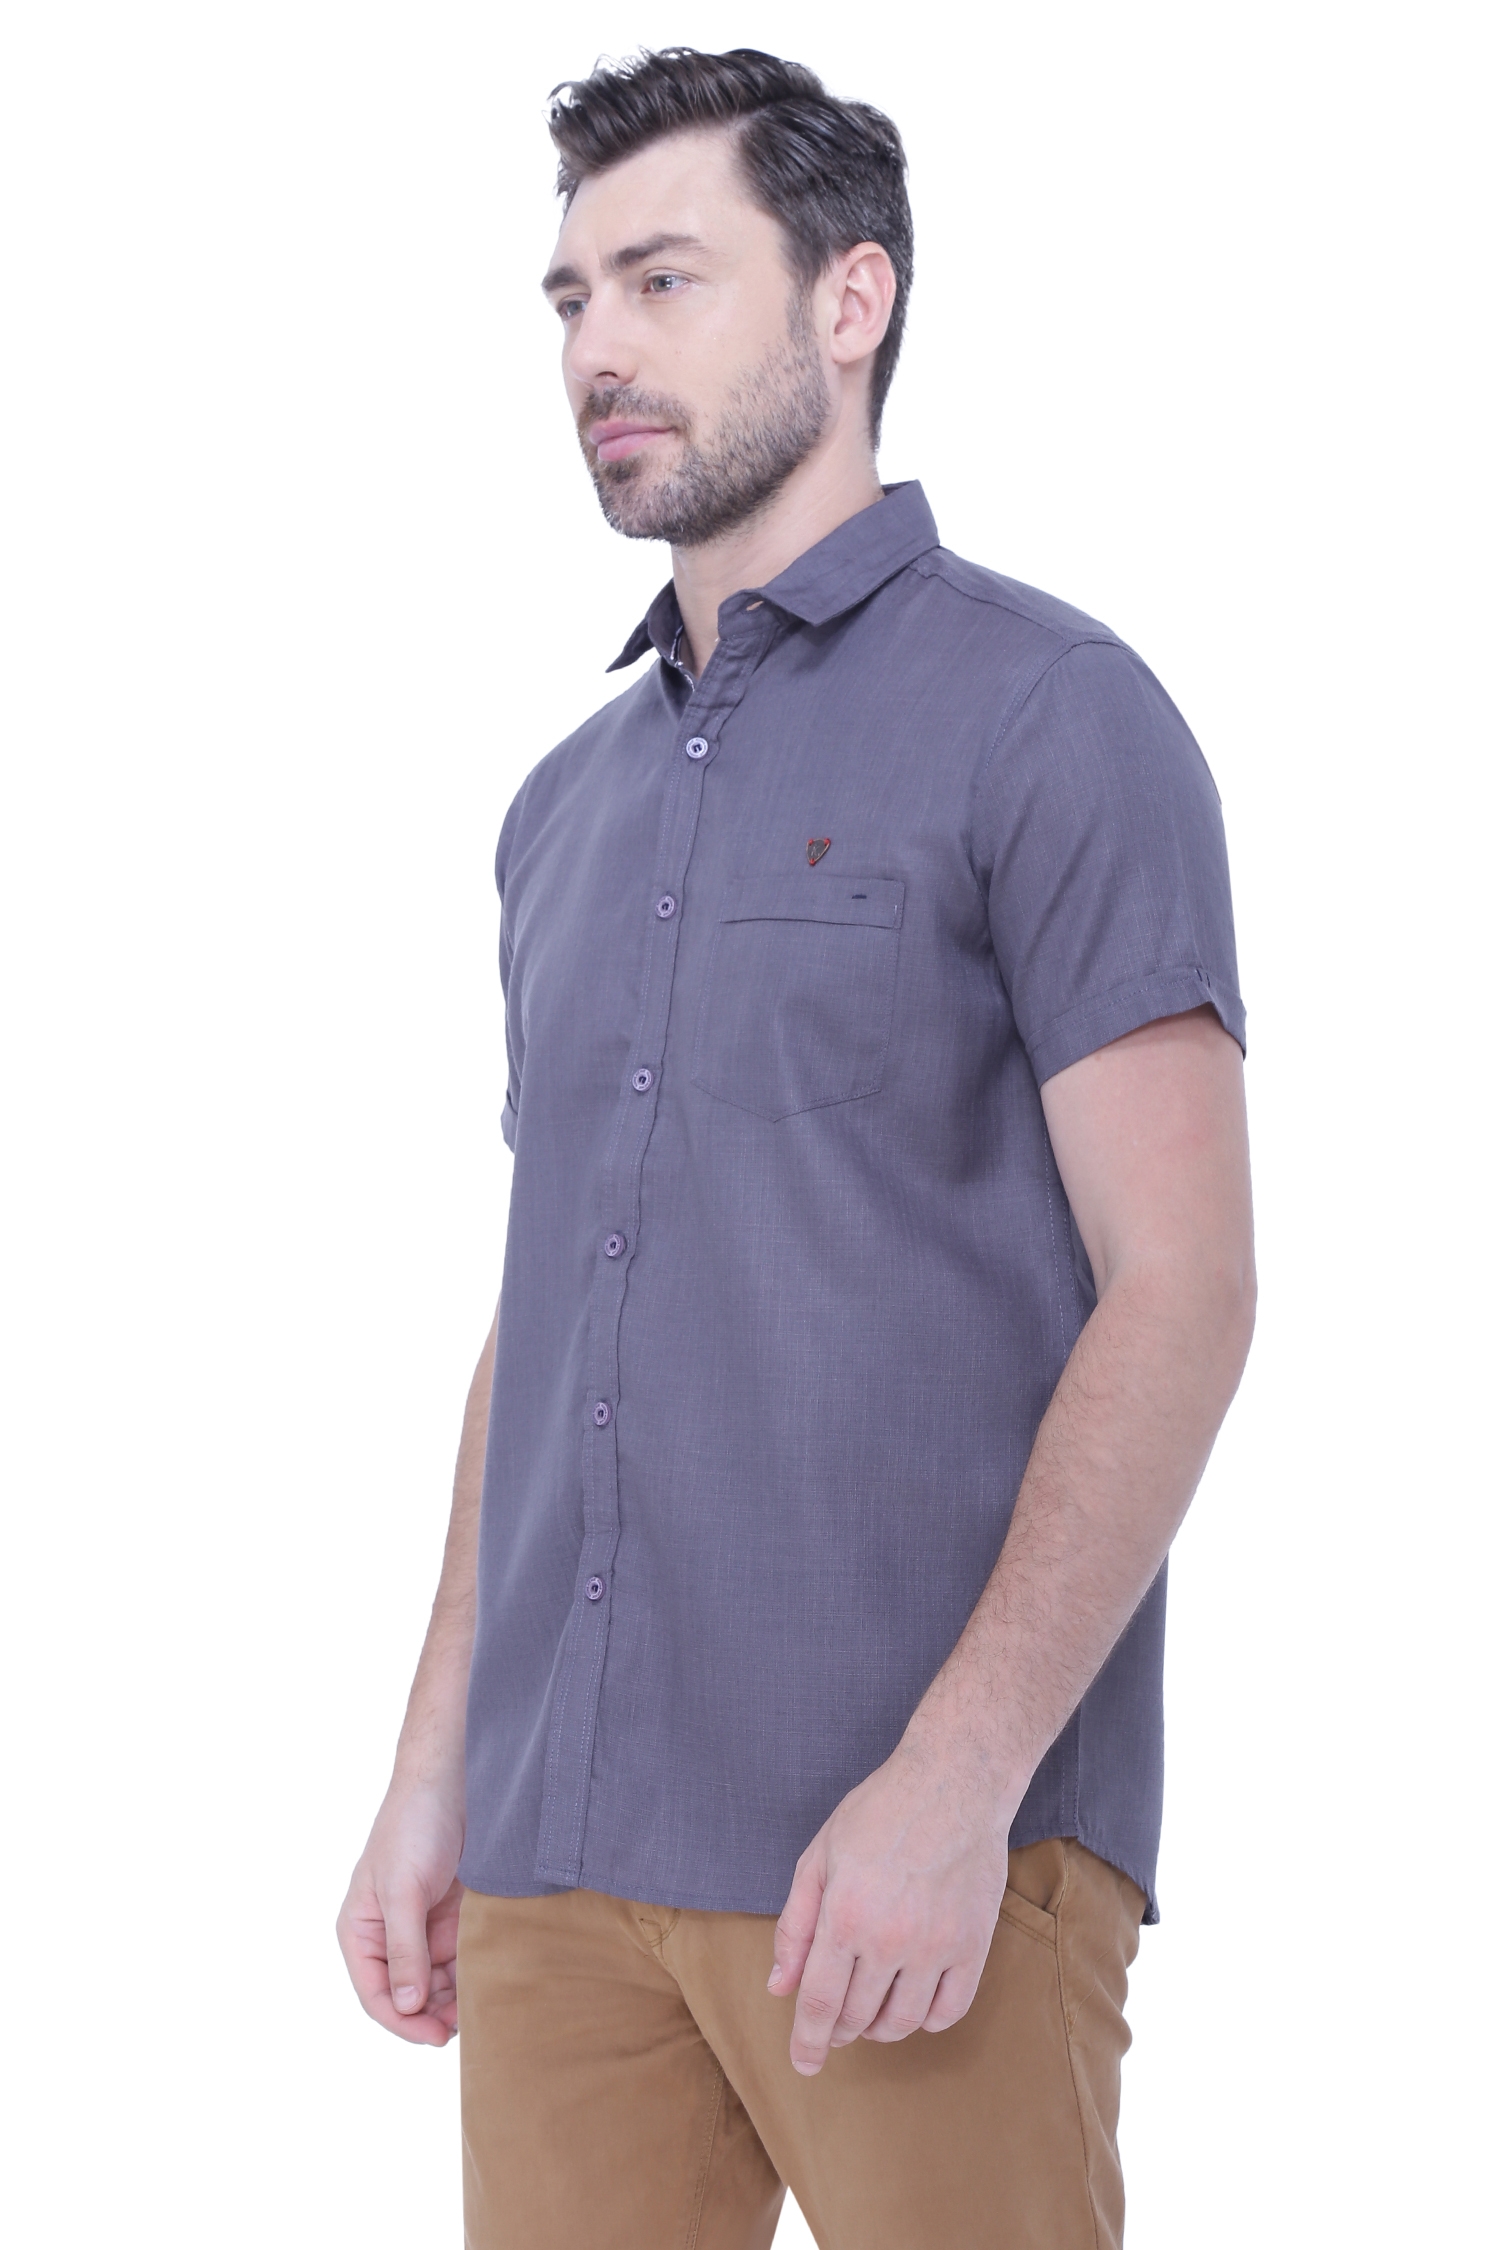 Kuons Avenue | Kuons Avenue Men's Linen Blend Half Sleeves Casual Shirt-KACLHS1221 1